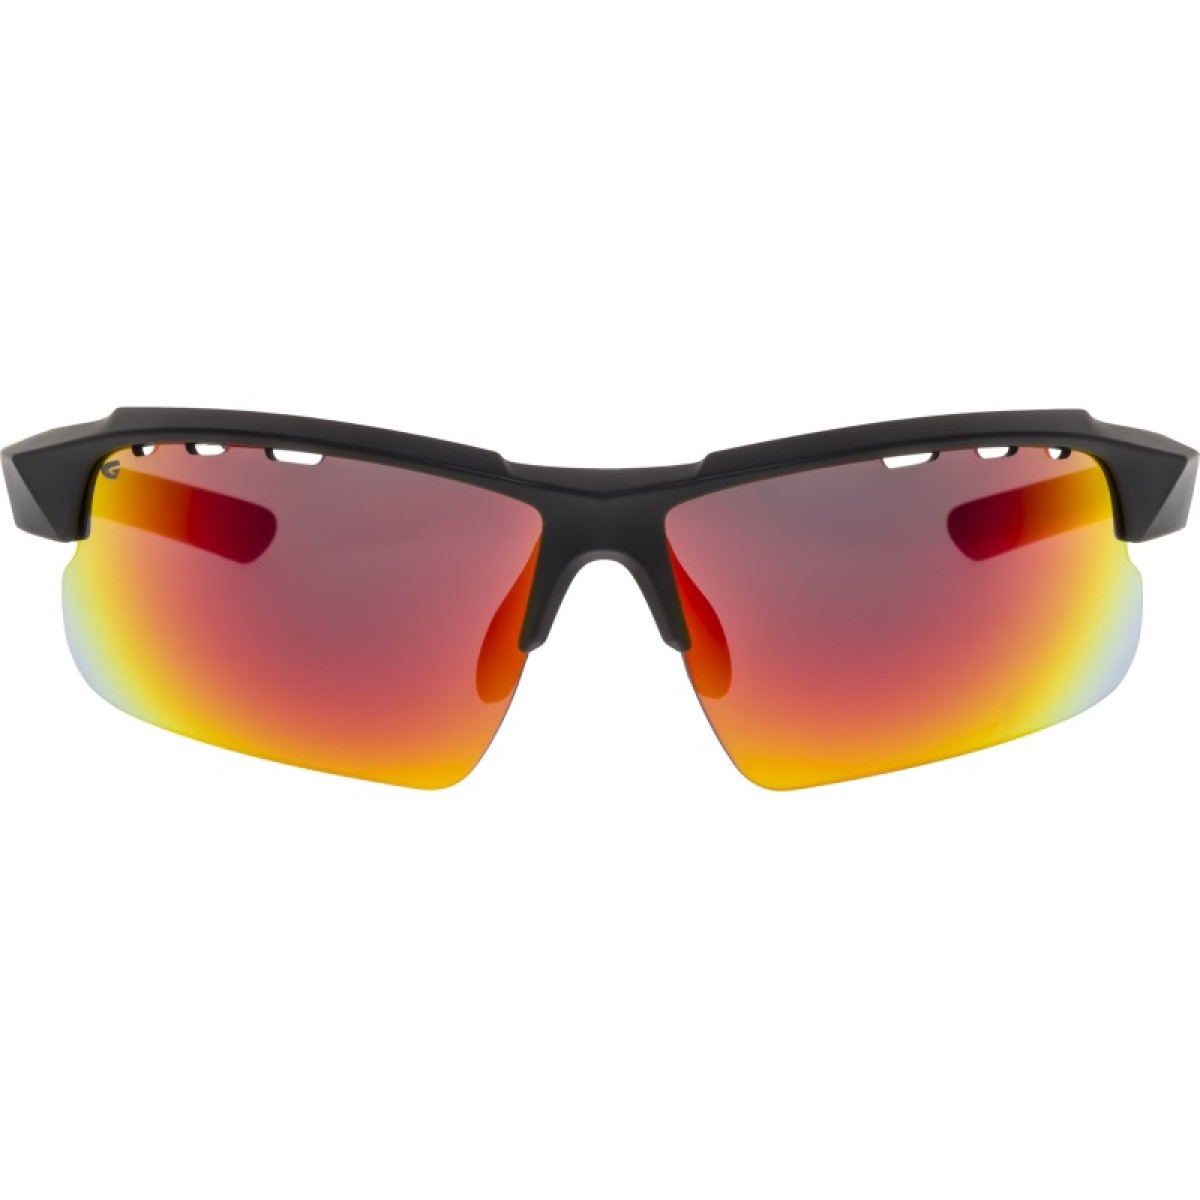 Sunglasses Faun E579-2 Black GOG - view 5